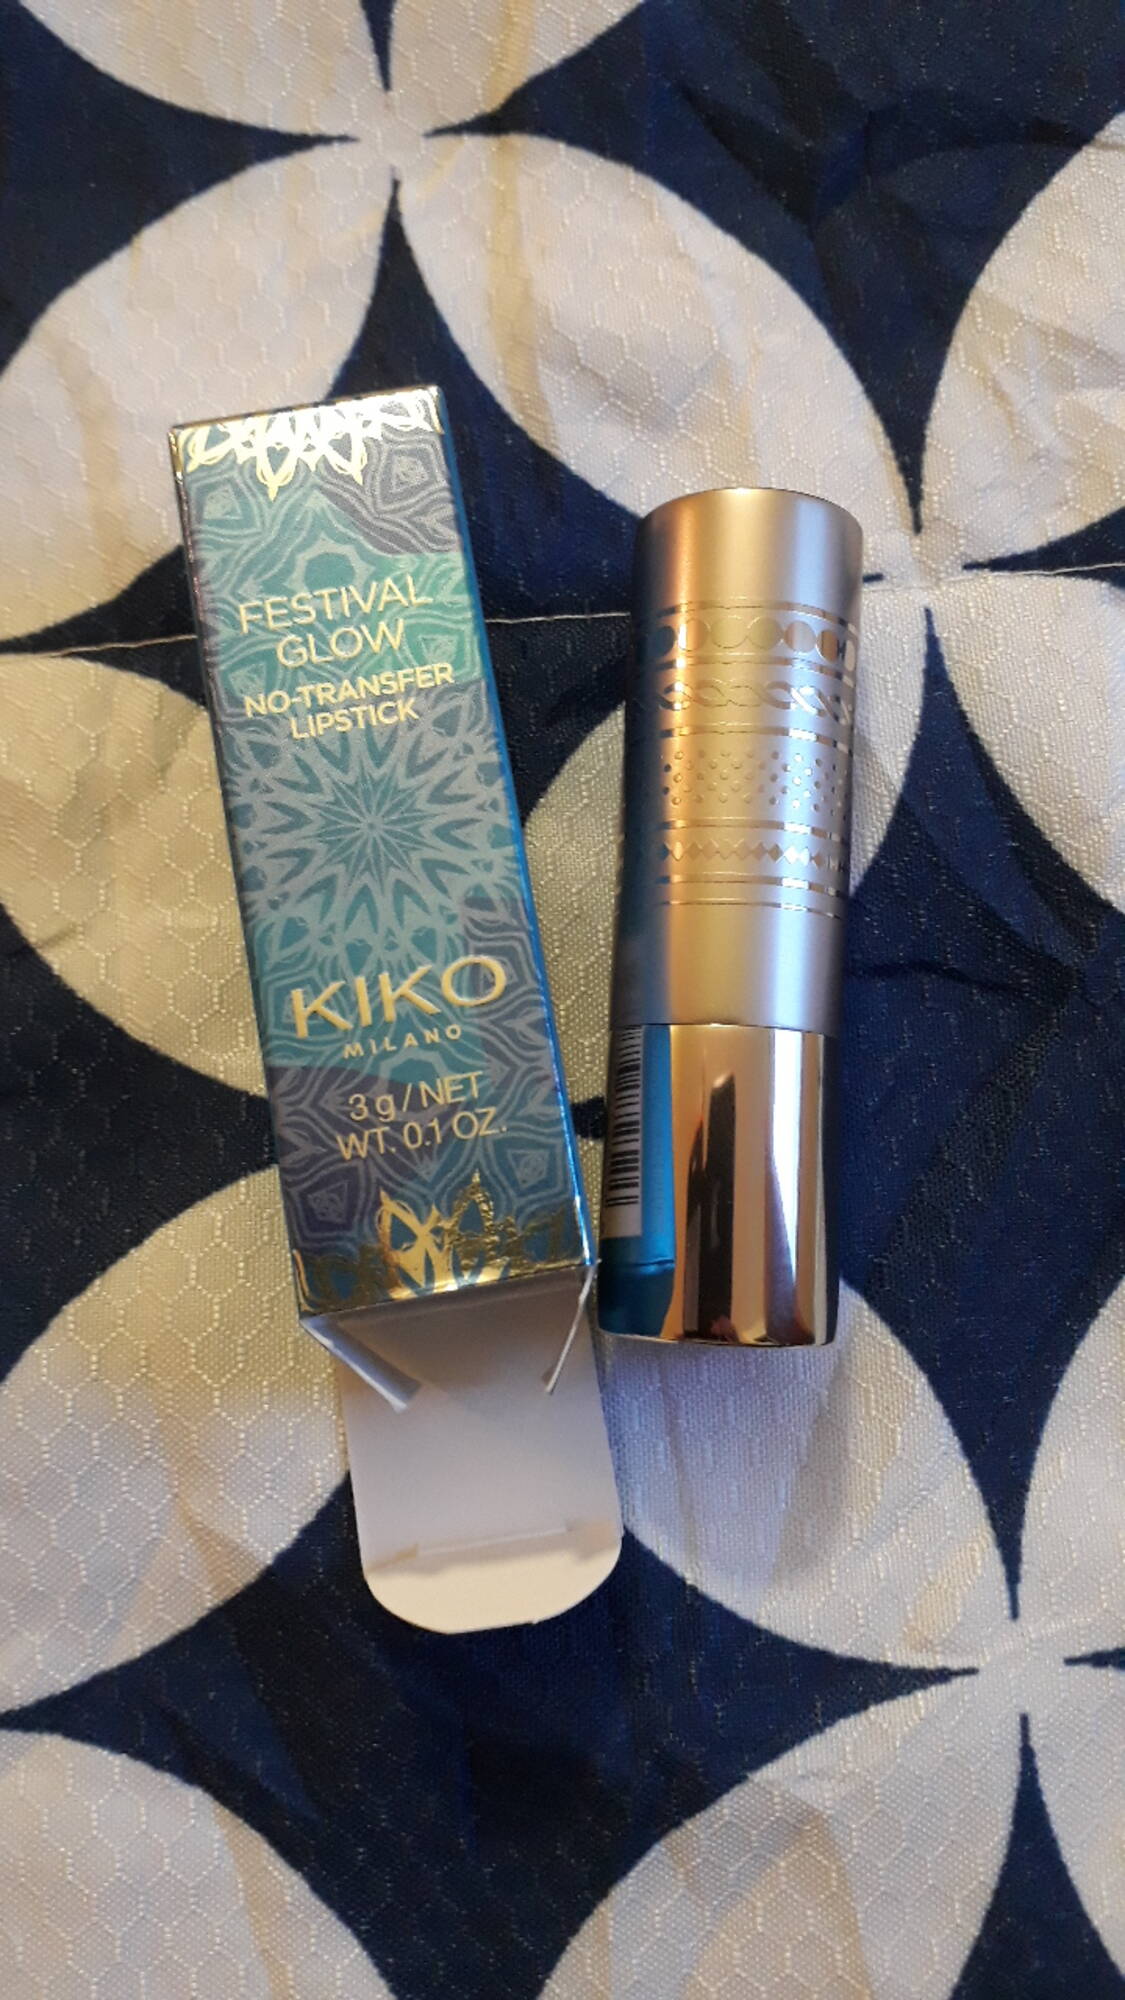 KIKO - Festival Glow - No-transfer lipstick 03